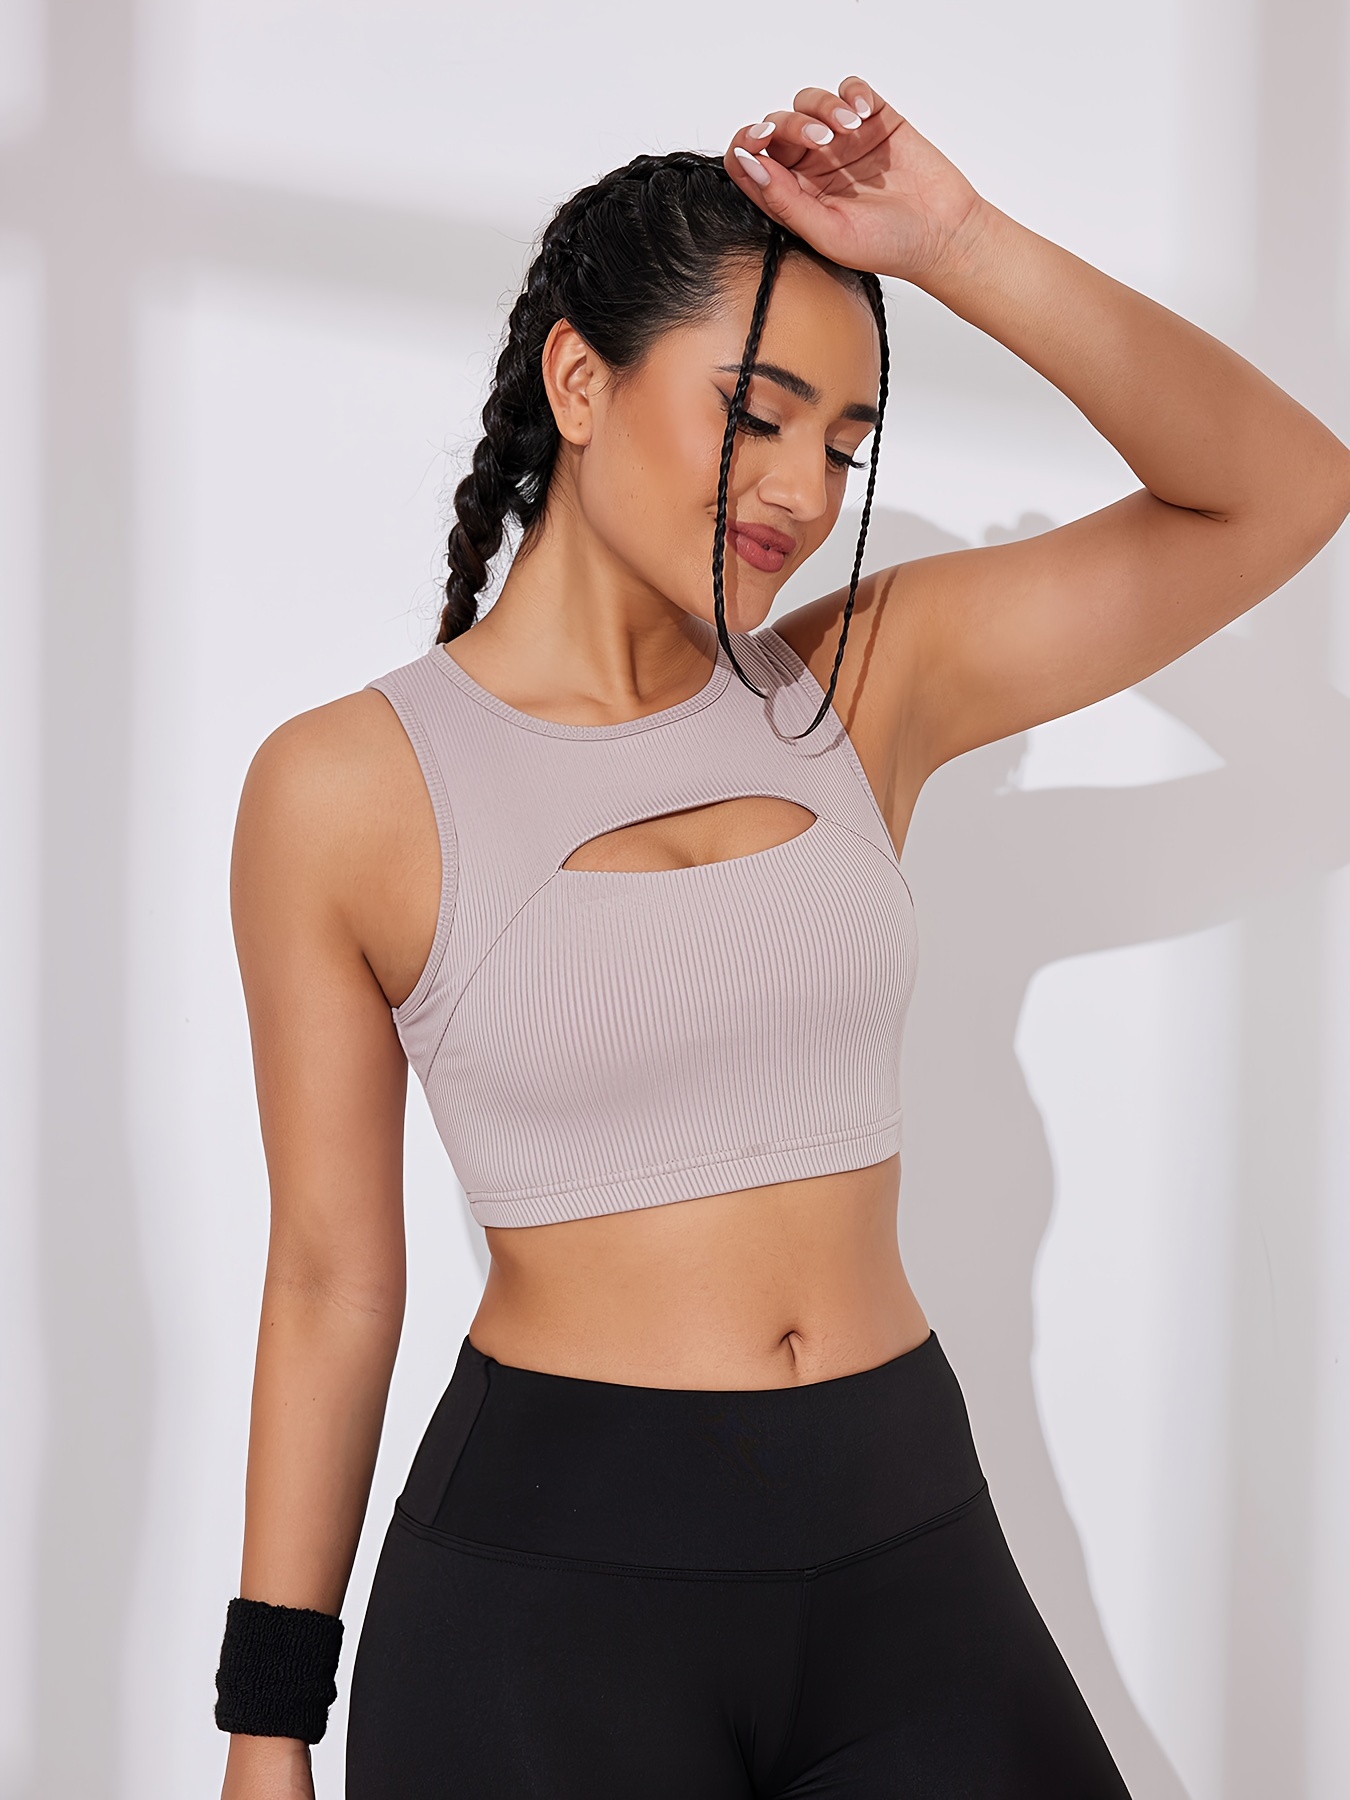 Sports Bras for Women Womens Strap Yoga Sports Bra Cordless Padded Medium  Workout Crop Tank Top